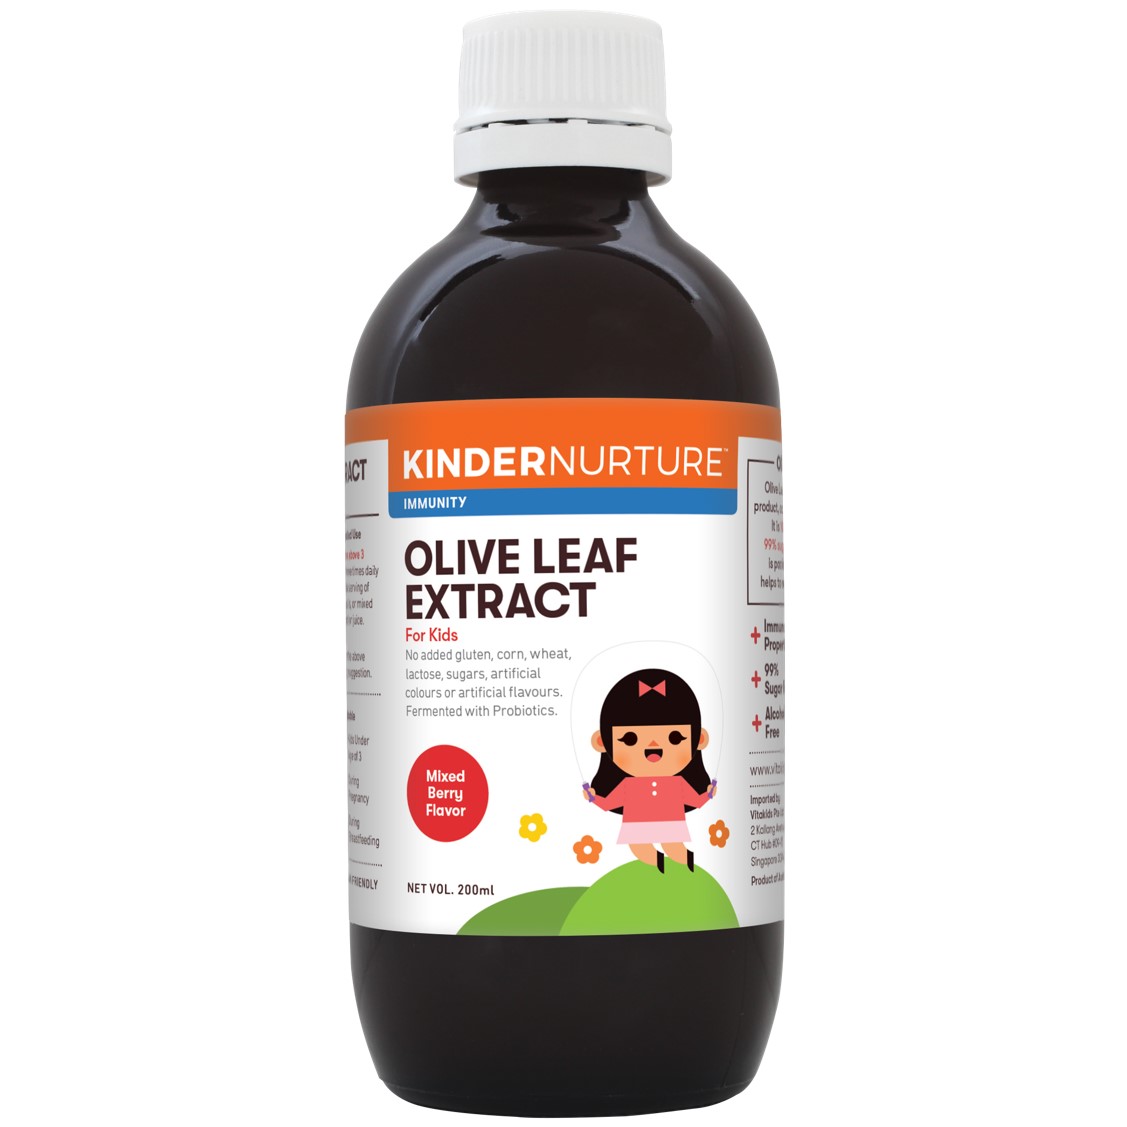 KinderNurture Bio Fermented Olive Leaf Extract For Kids, 200mL